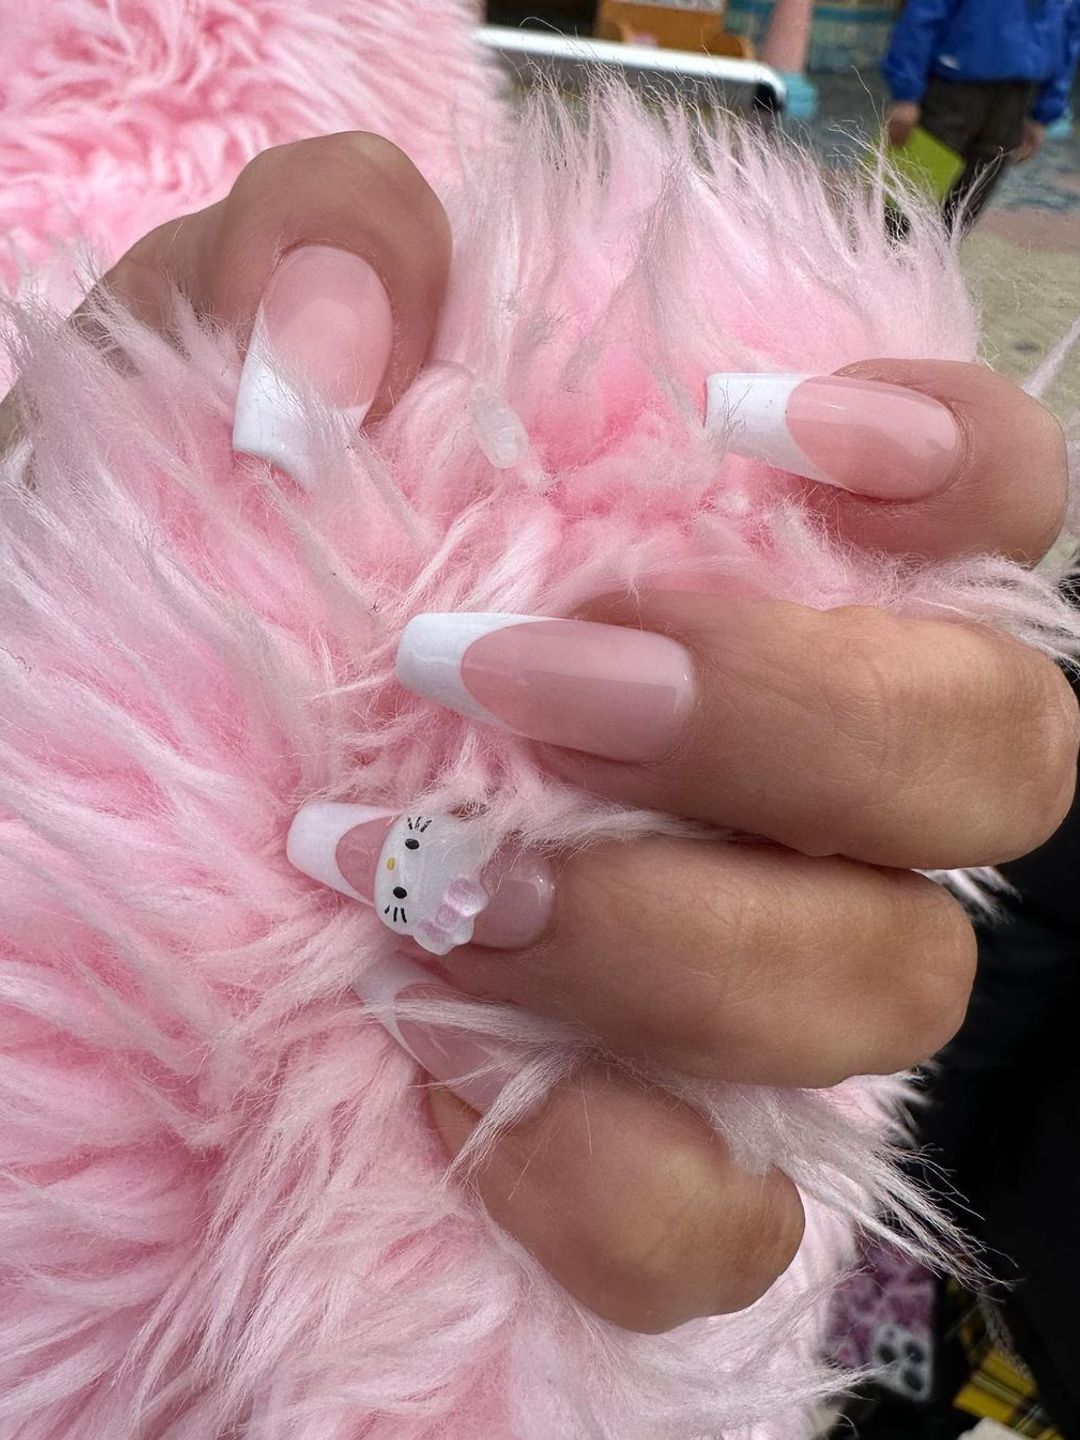 Kim Kardashian shows off her Hello Kitty manicure 